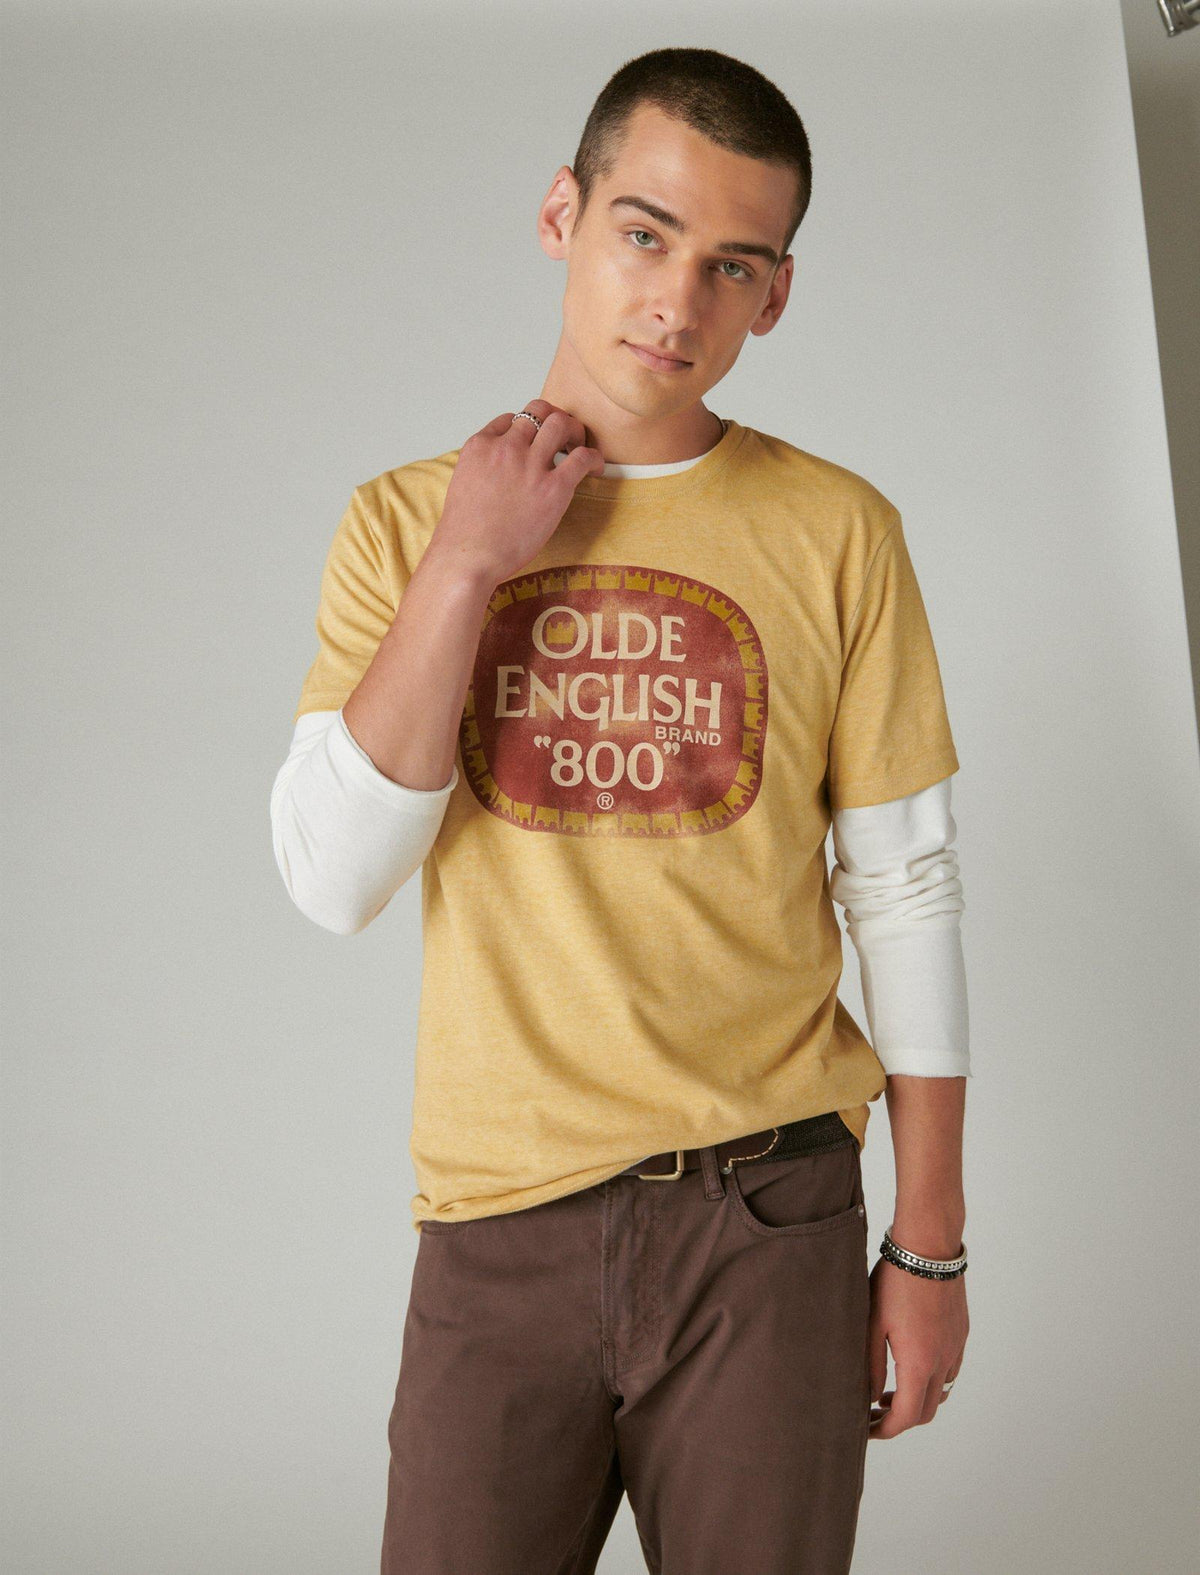 Lucky Brand Olde English 800 Tee - Men's Clothing Tops Shirts Tee Graphic T Shirts Honey Mustard